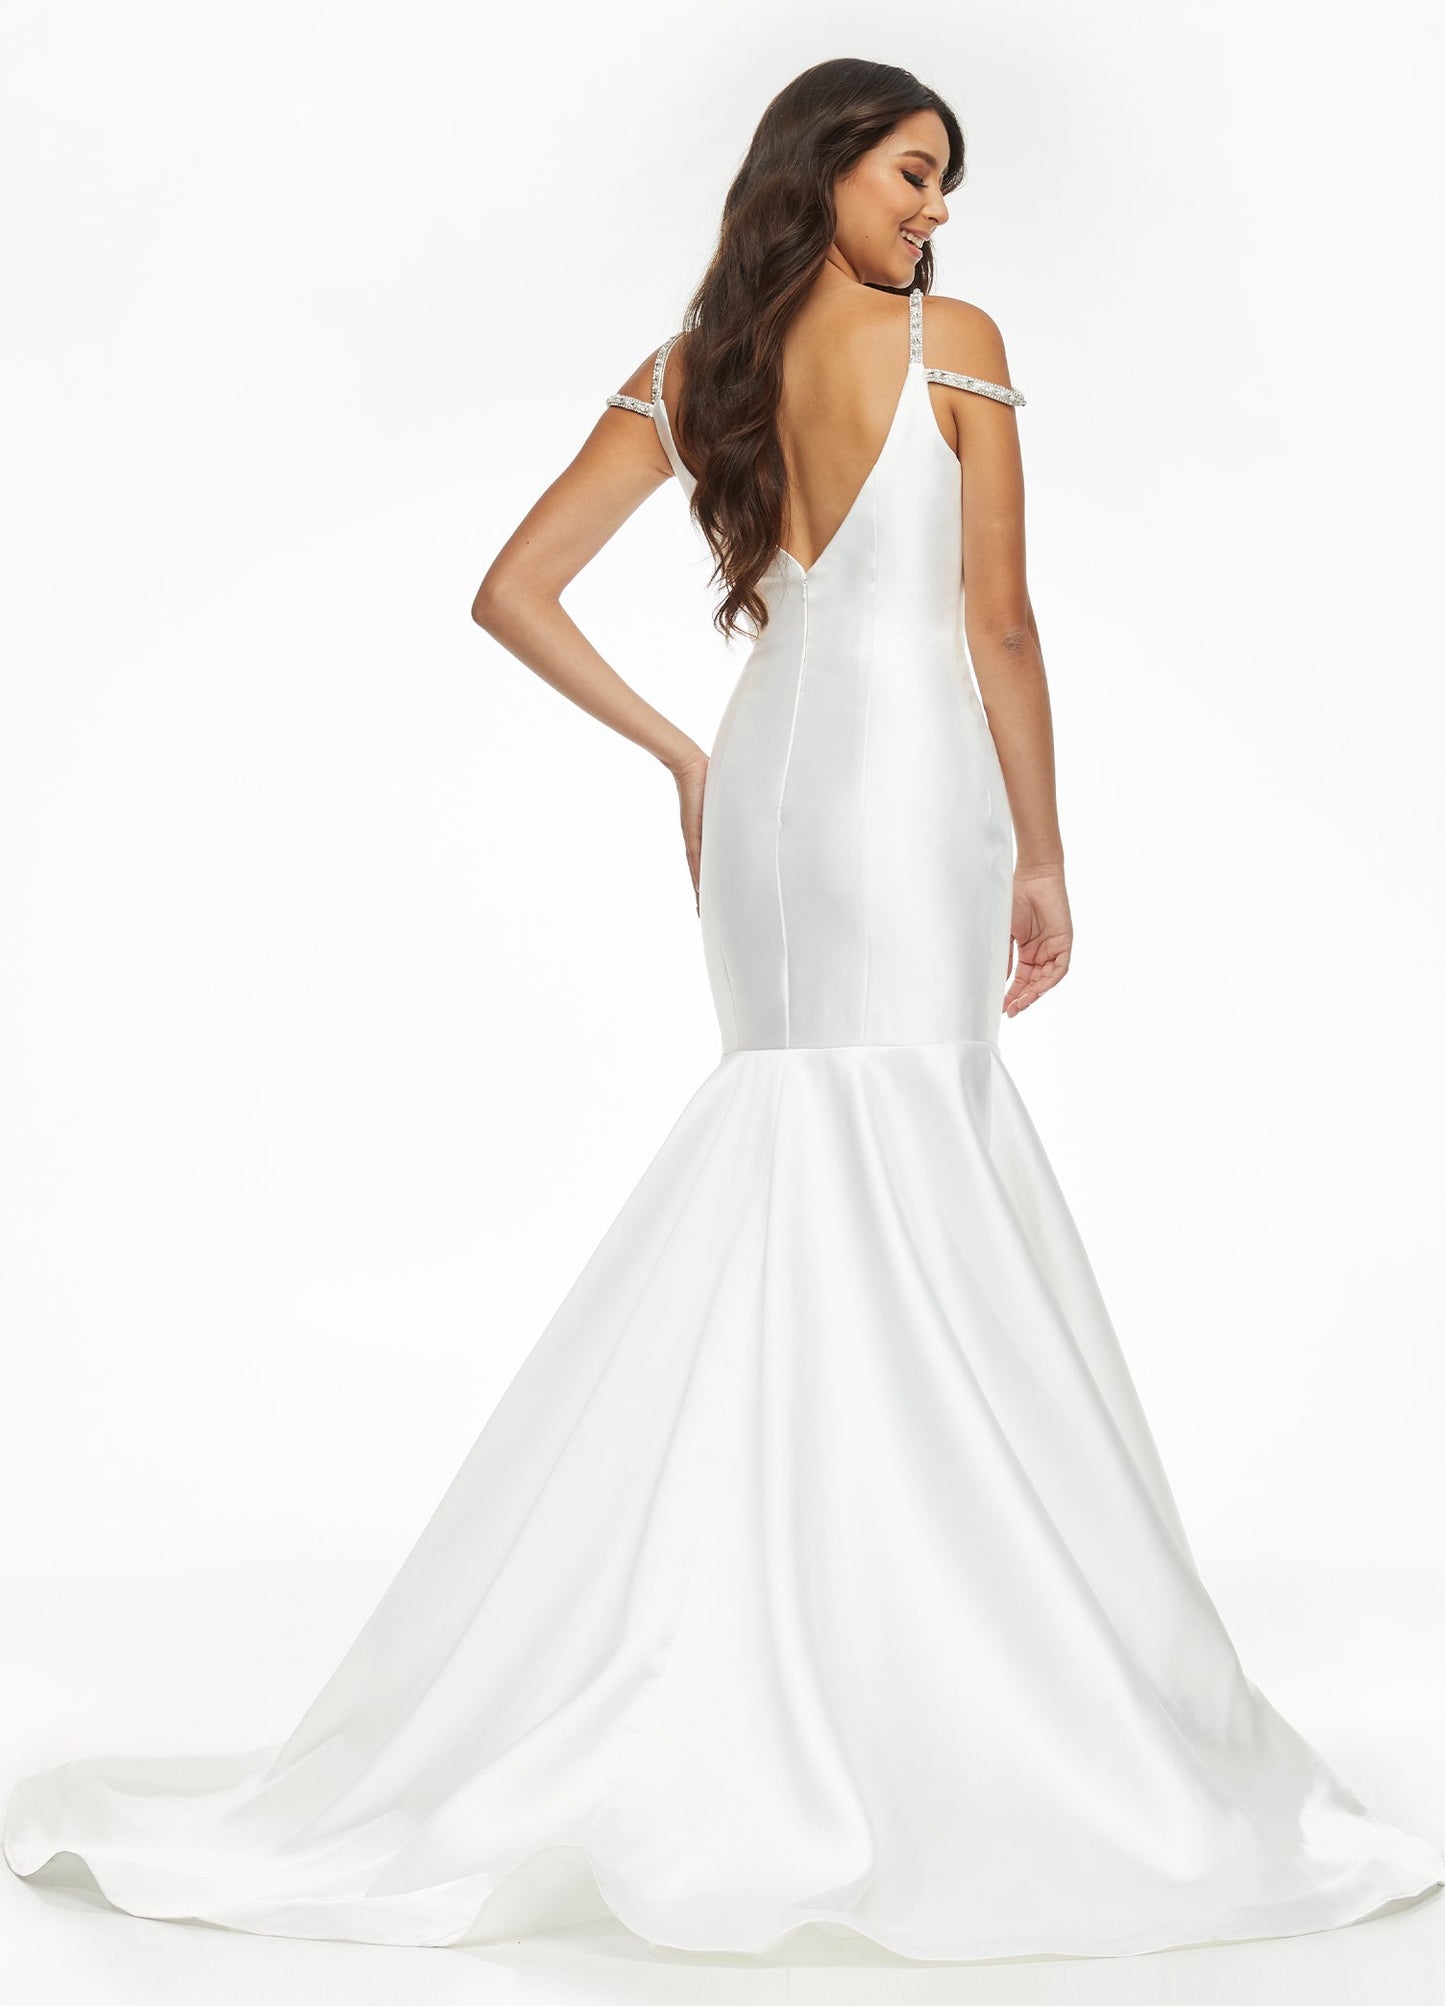 Ashley-Lauren-11103-ivory-prom-dress-back-embellished-straps-sweetheart-neckline-mermaid-dress